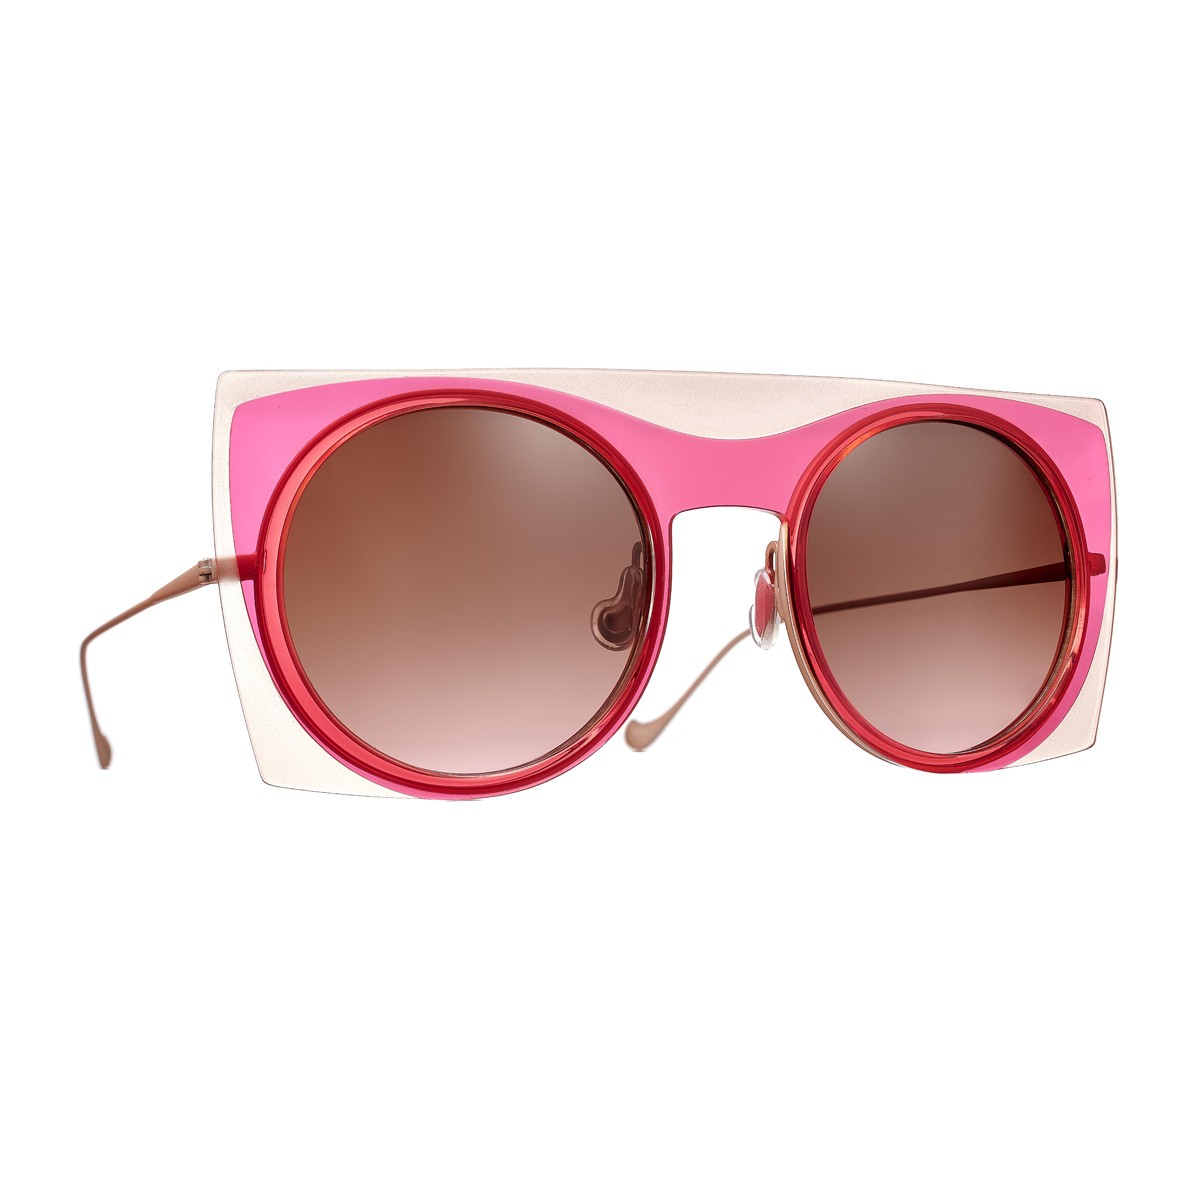 Caroline Abram Divine | Women's sunglasses